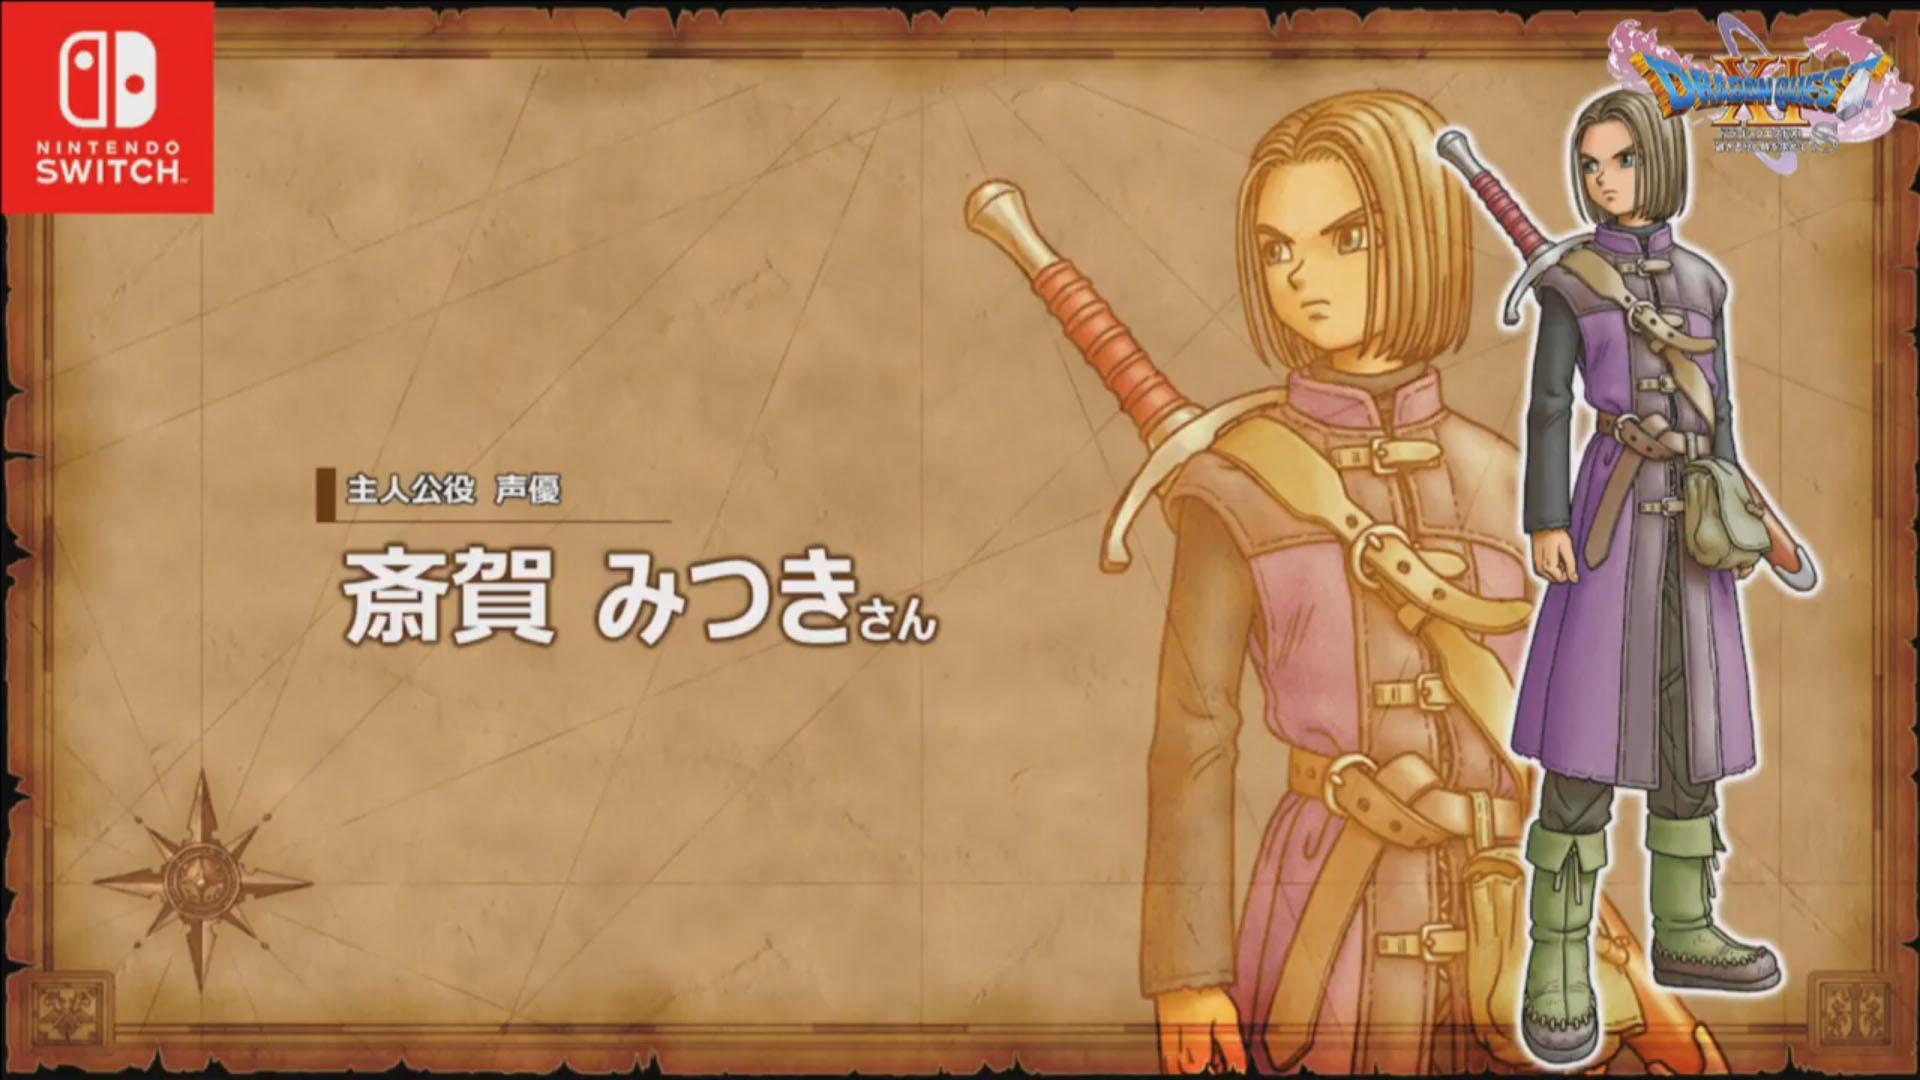 Dragon Quest XI S introduces Japanese voice actors for